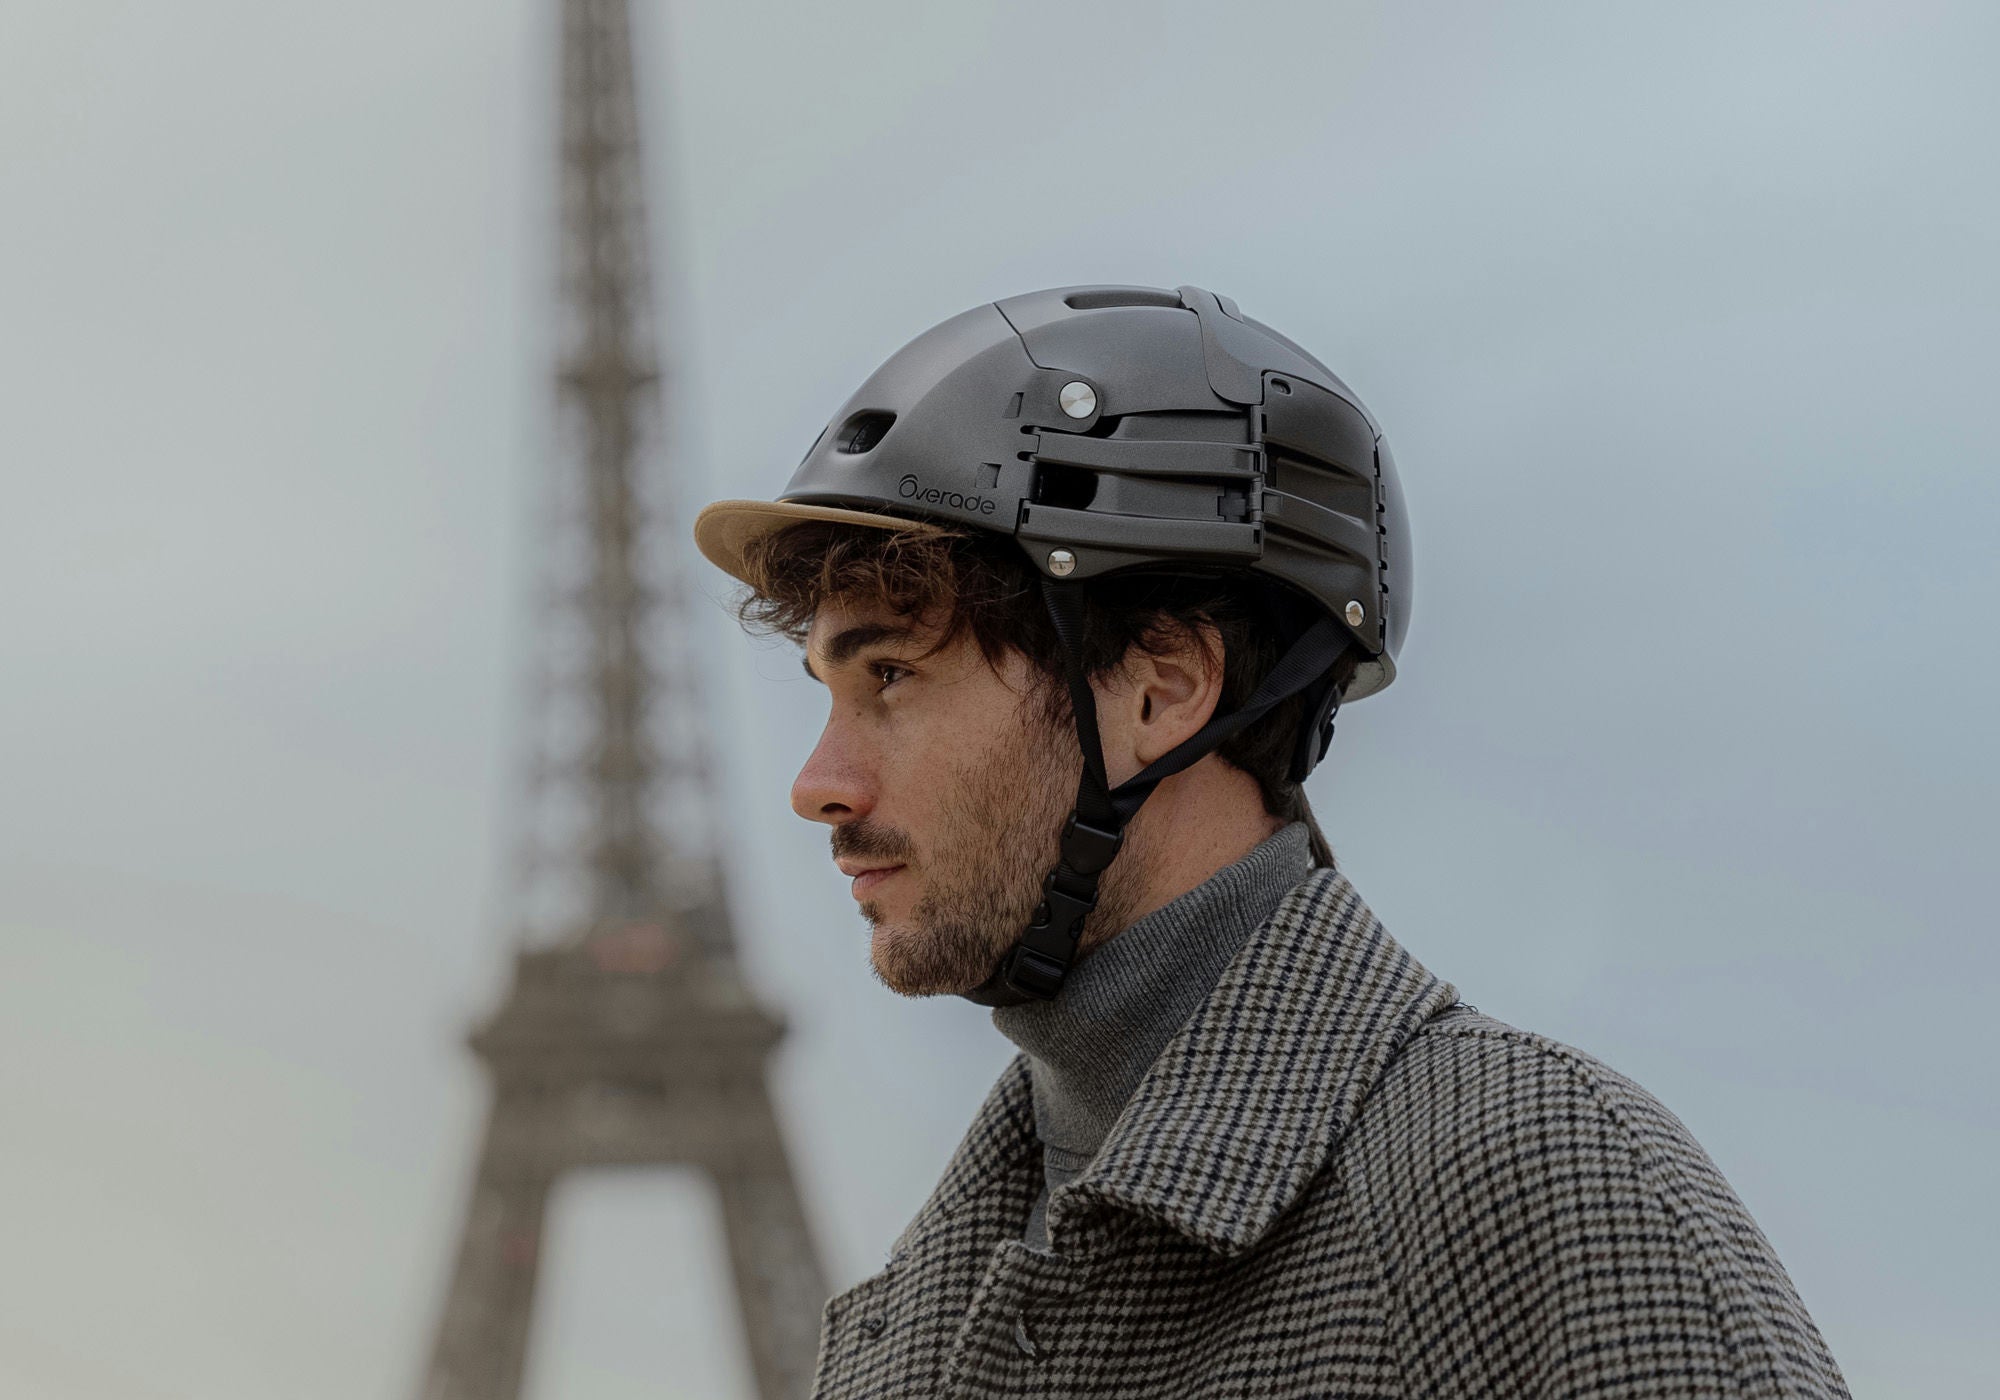 Overade - Visière amovible adaptable au casque vélo pliable PLIXI